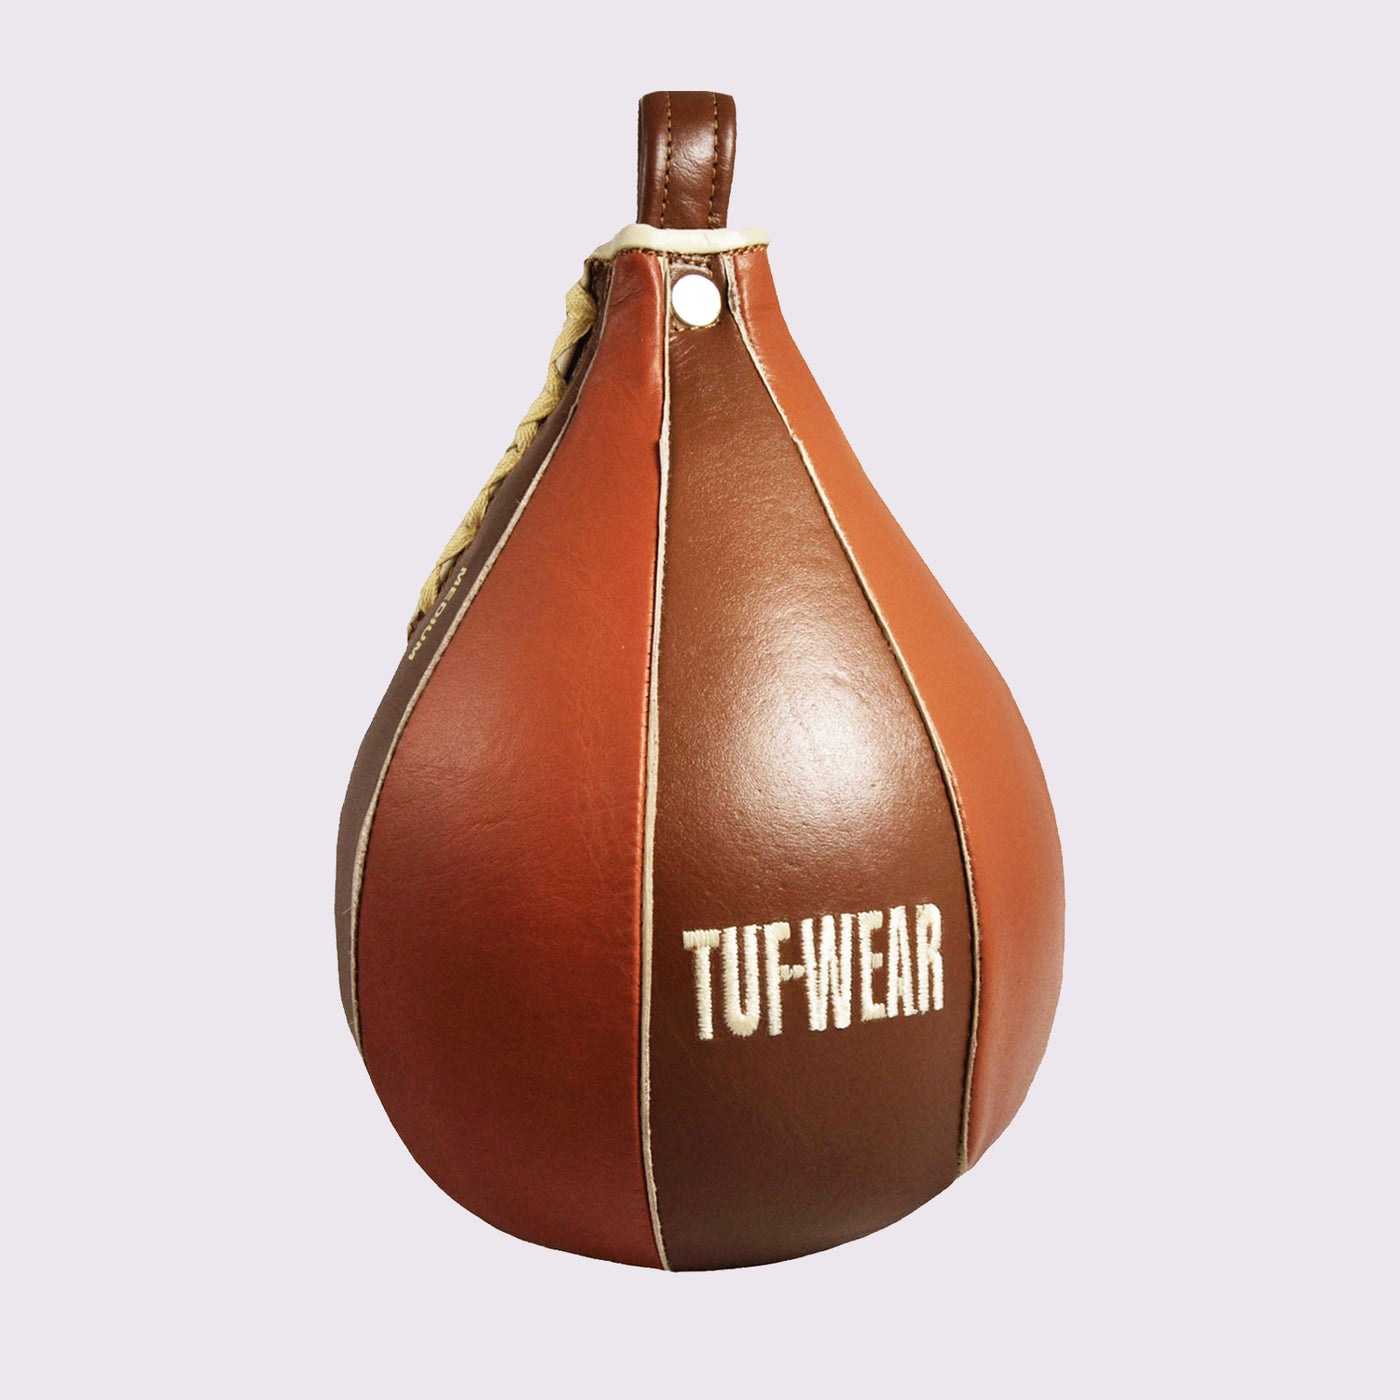 Tuf Wear Classic Brown Leather Speedball